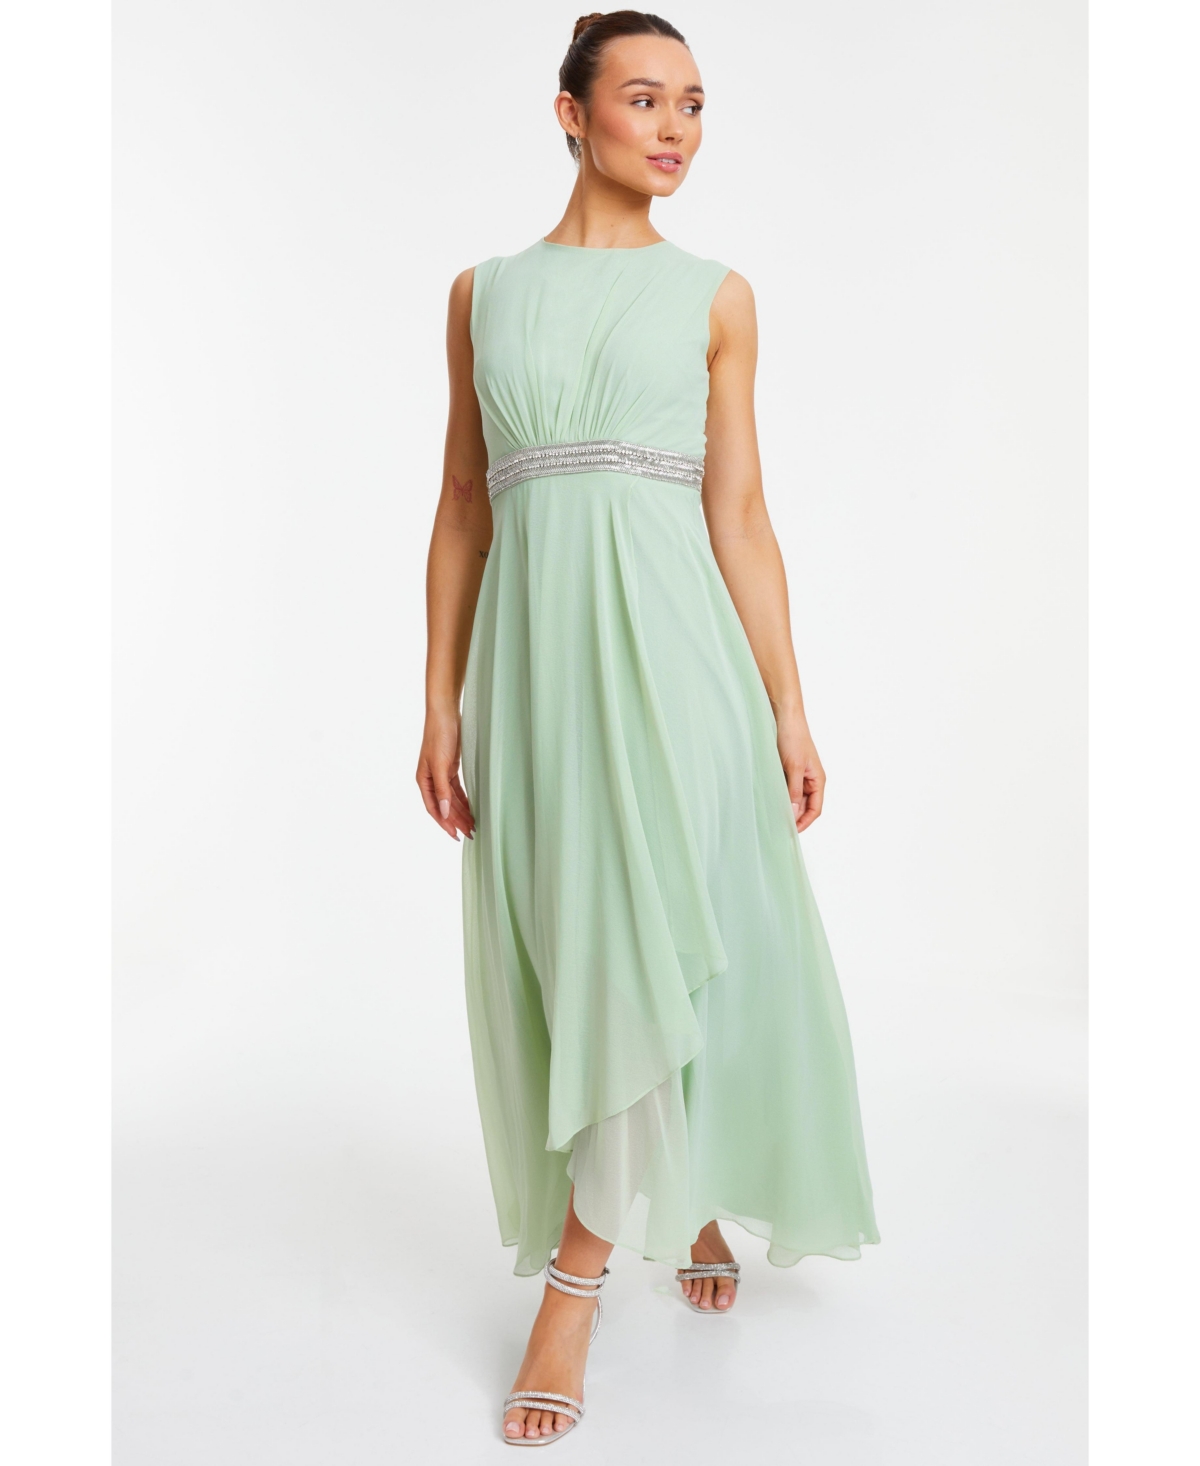 Plus Size Chiffon Embellished Round Neck Evening Dress - Green